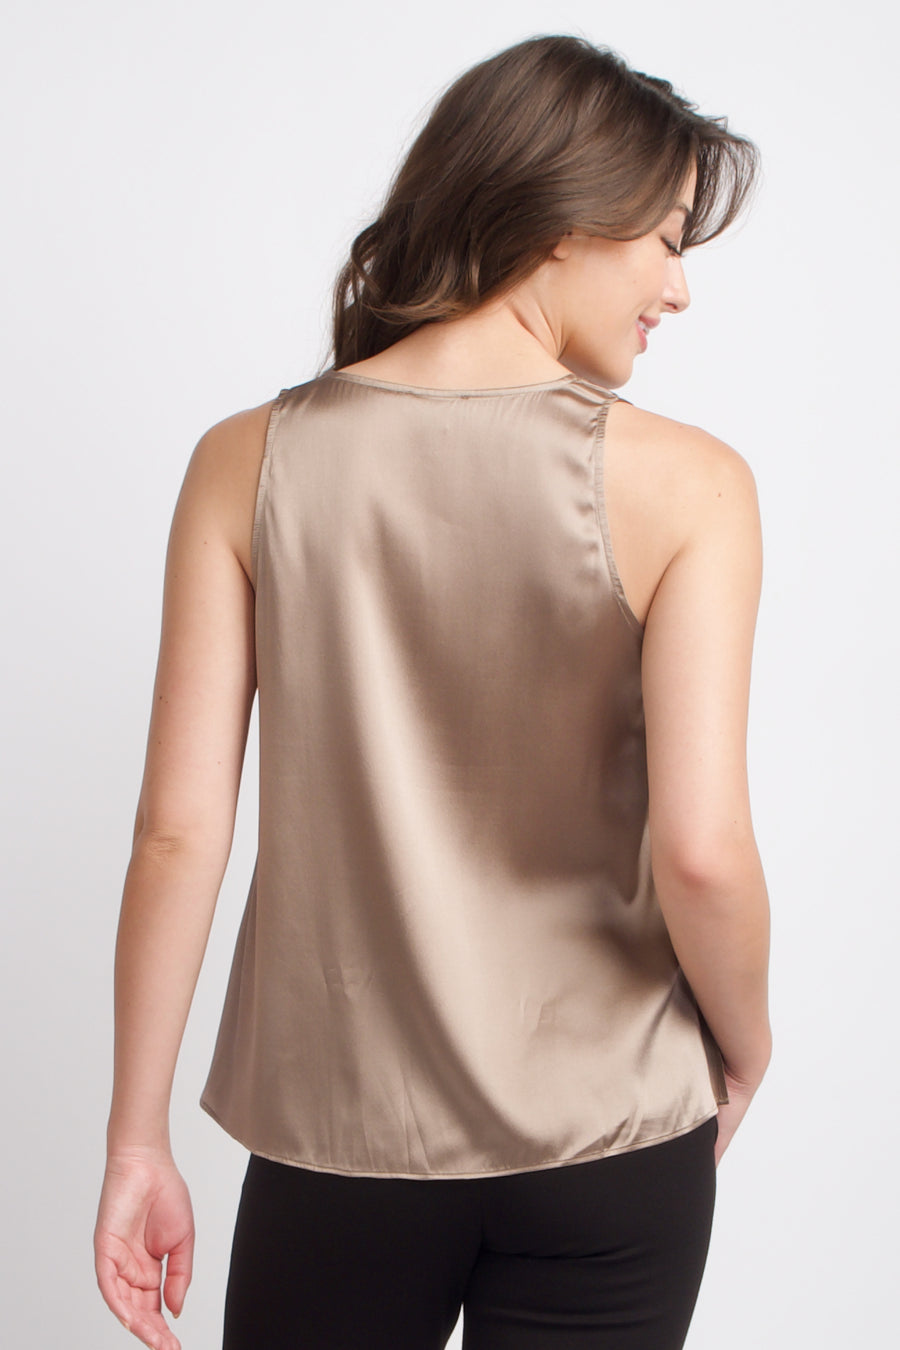 women's sleeveless silk work top